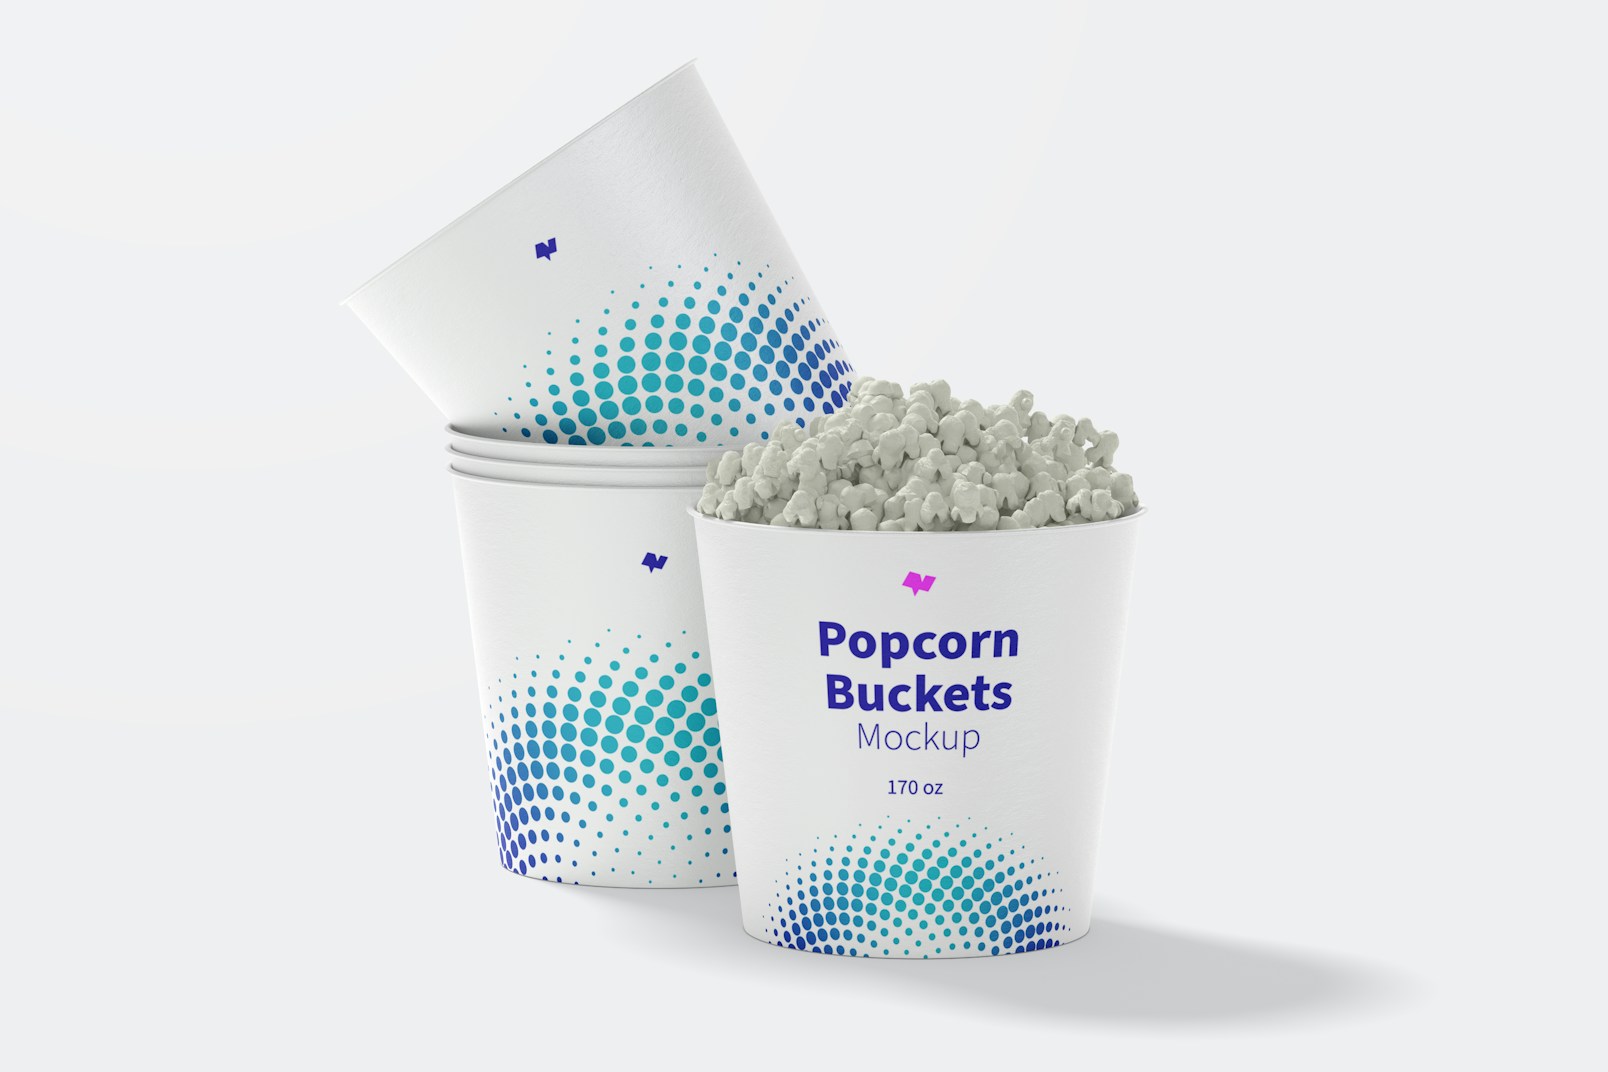 170 oz Popcorn Buckets Mockup, Right View